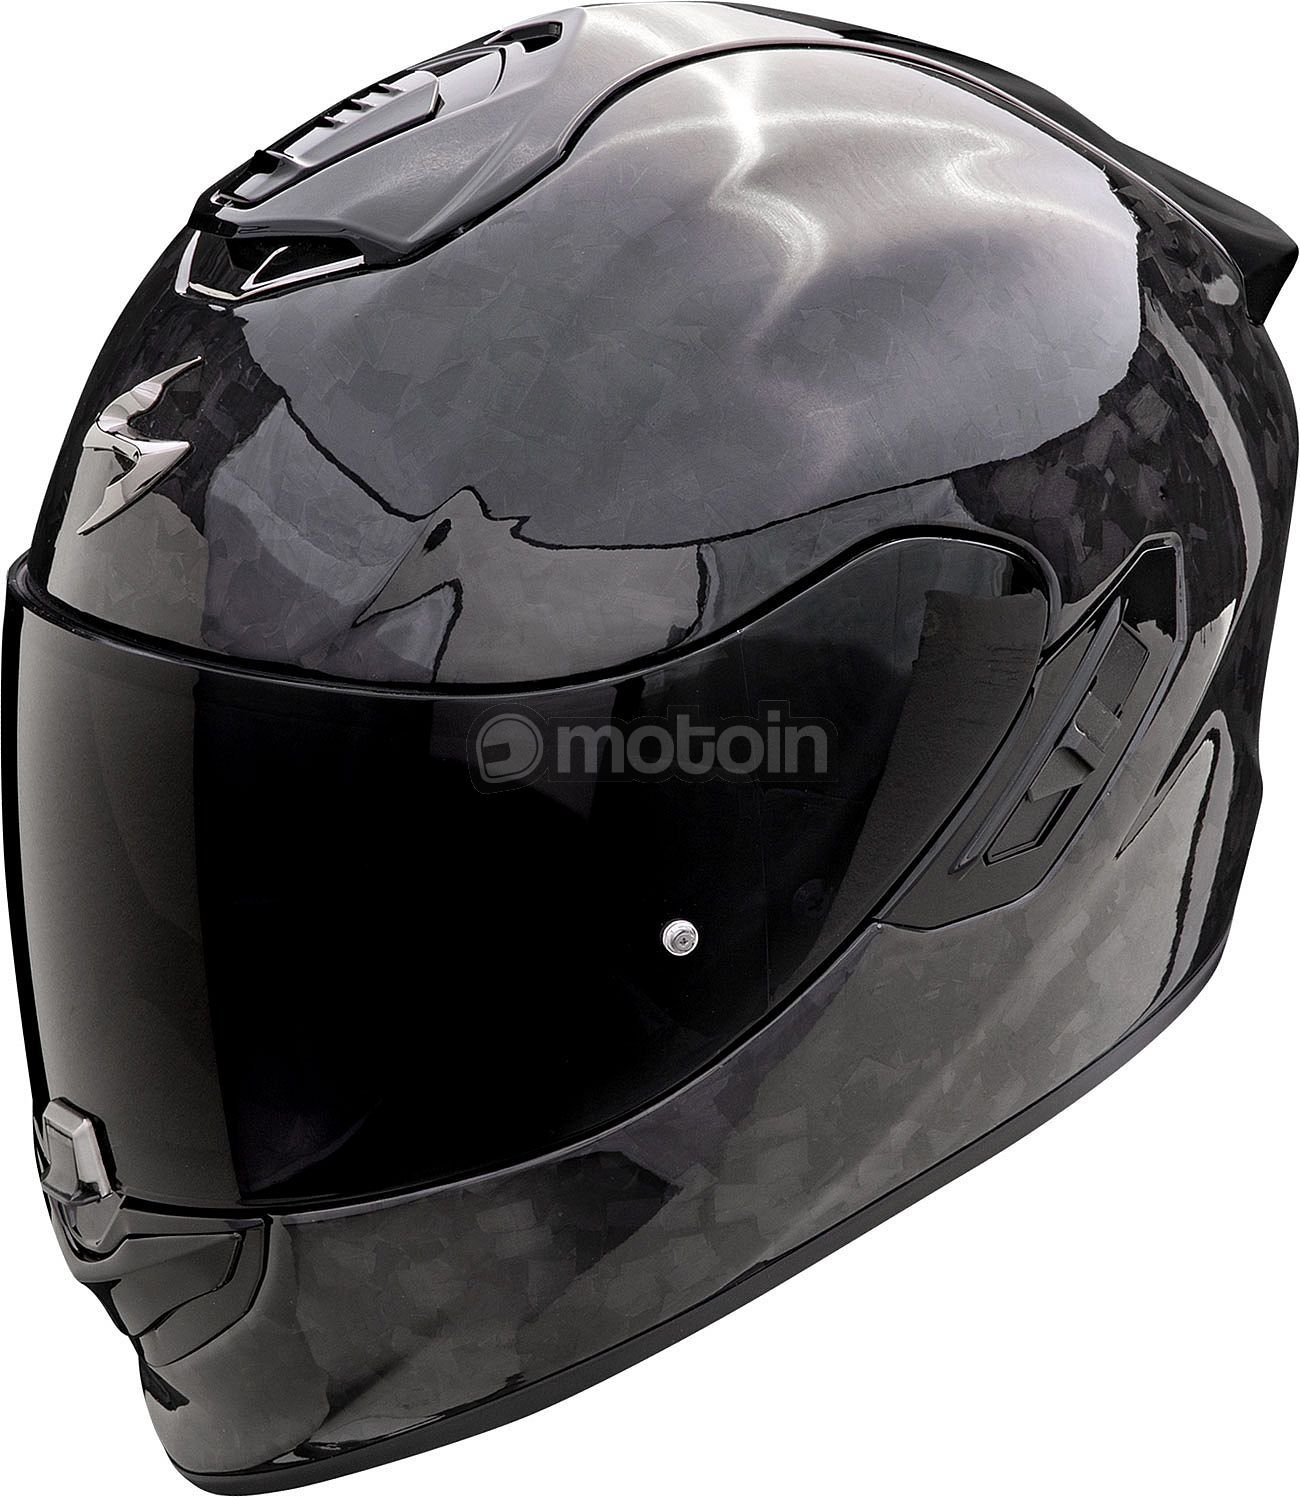 Scorpion EXO-1400 Evo Air II Carbon Onyx, casco integral